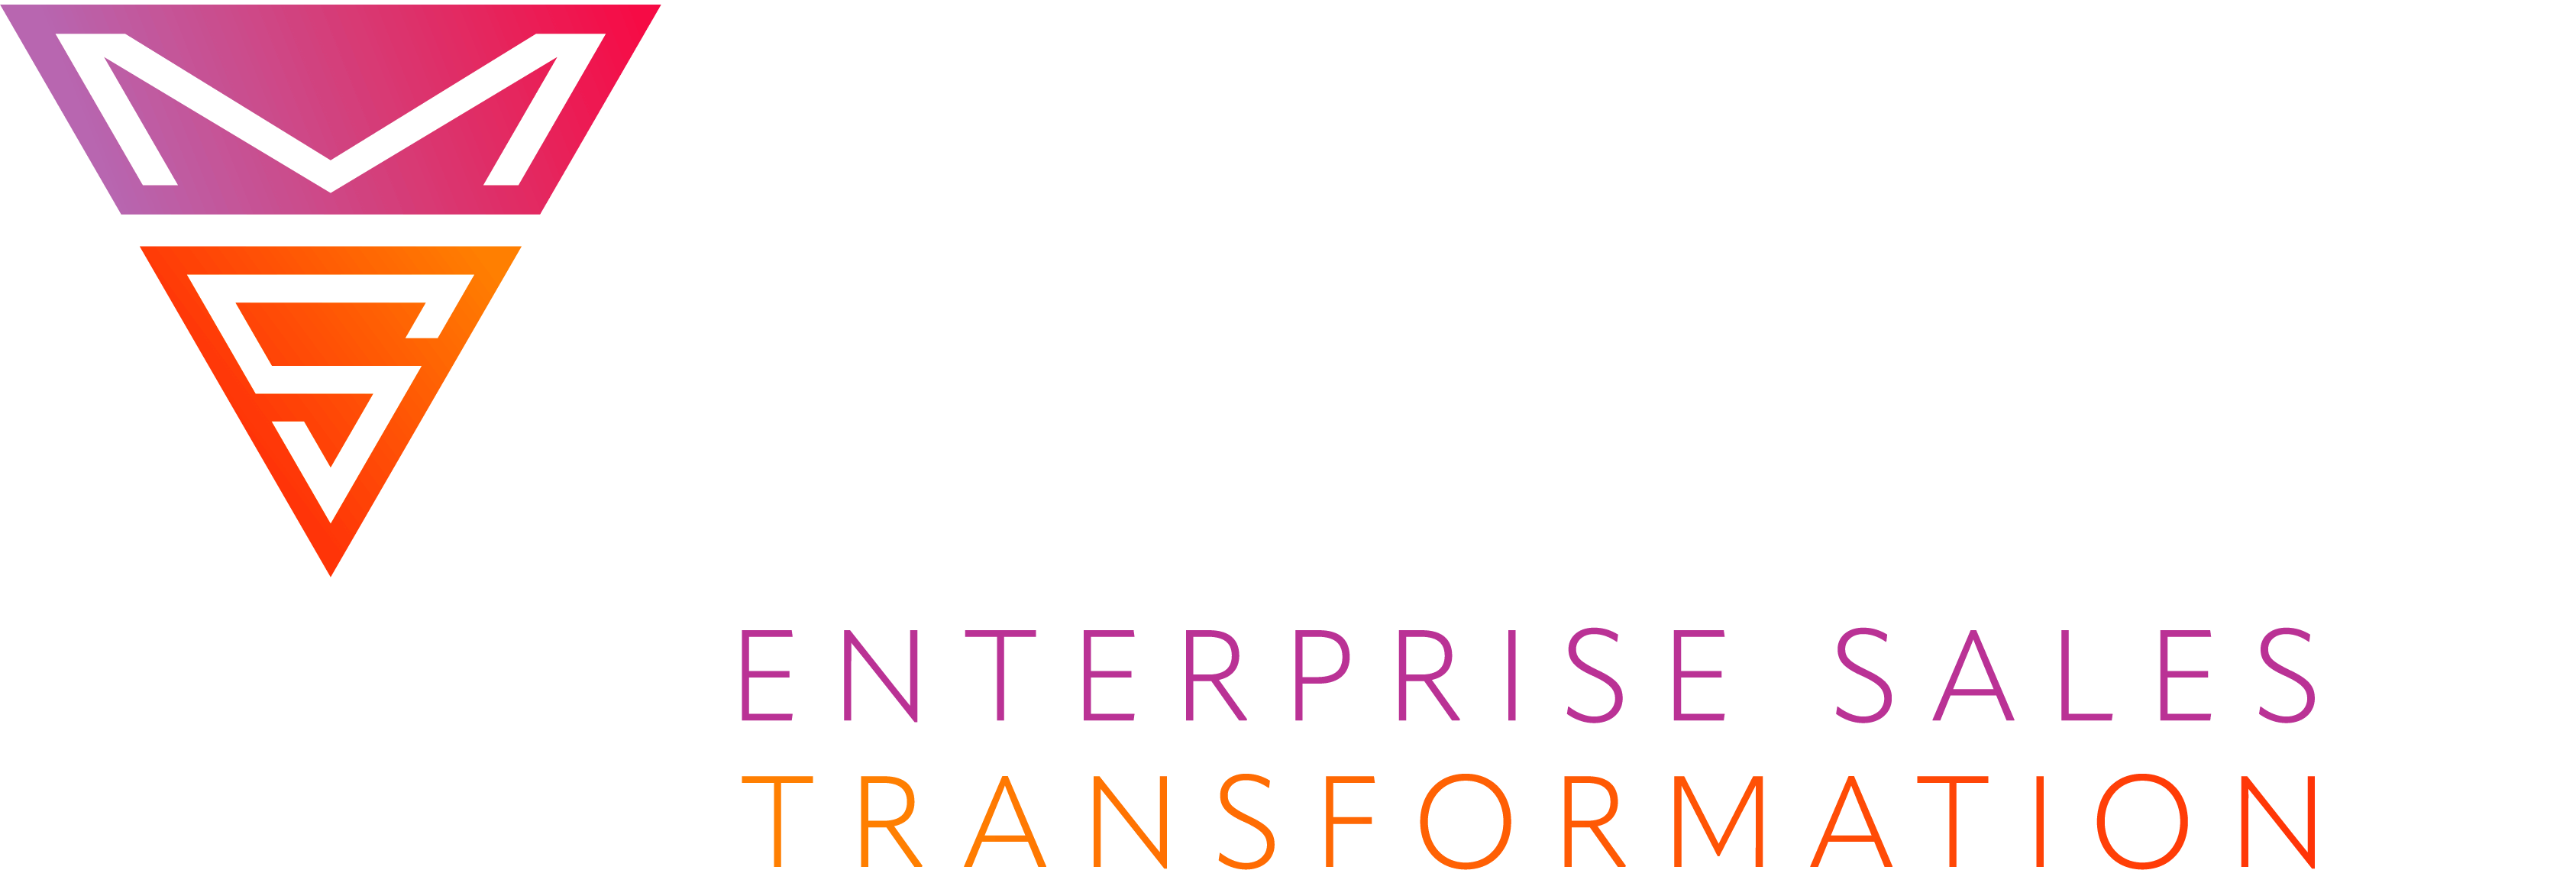 Magical Selling Logo